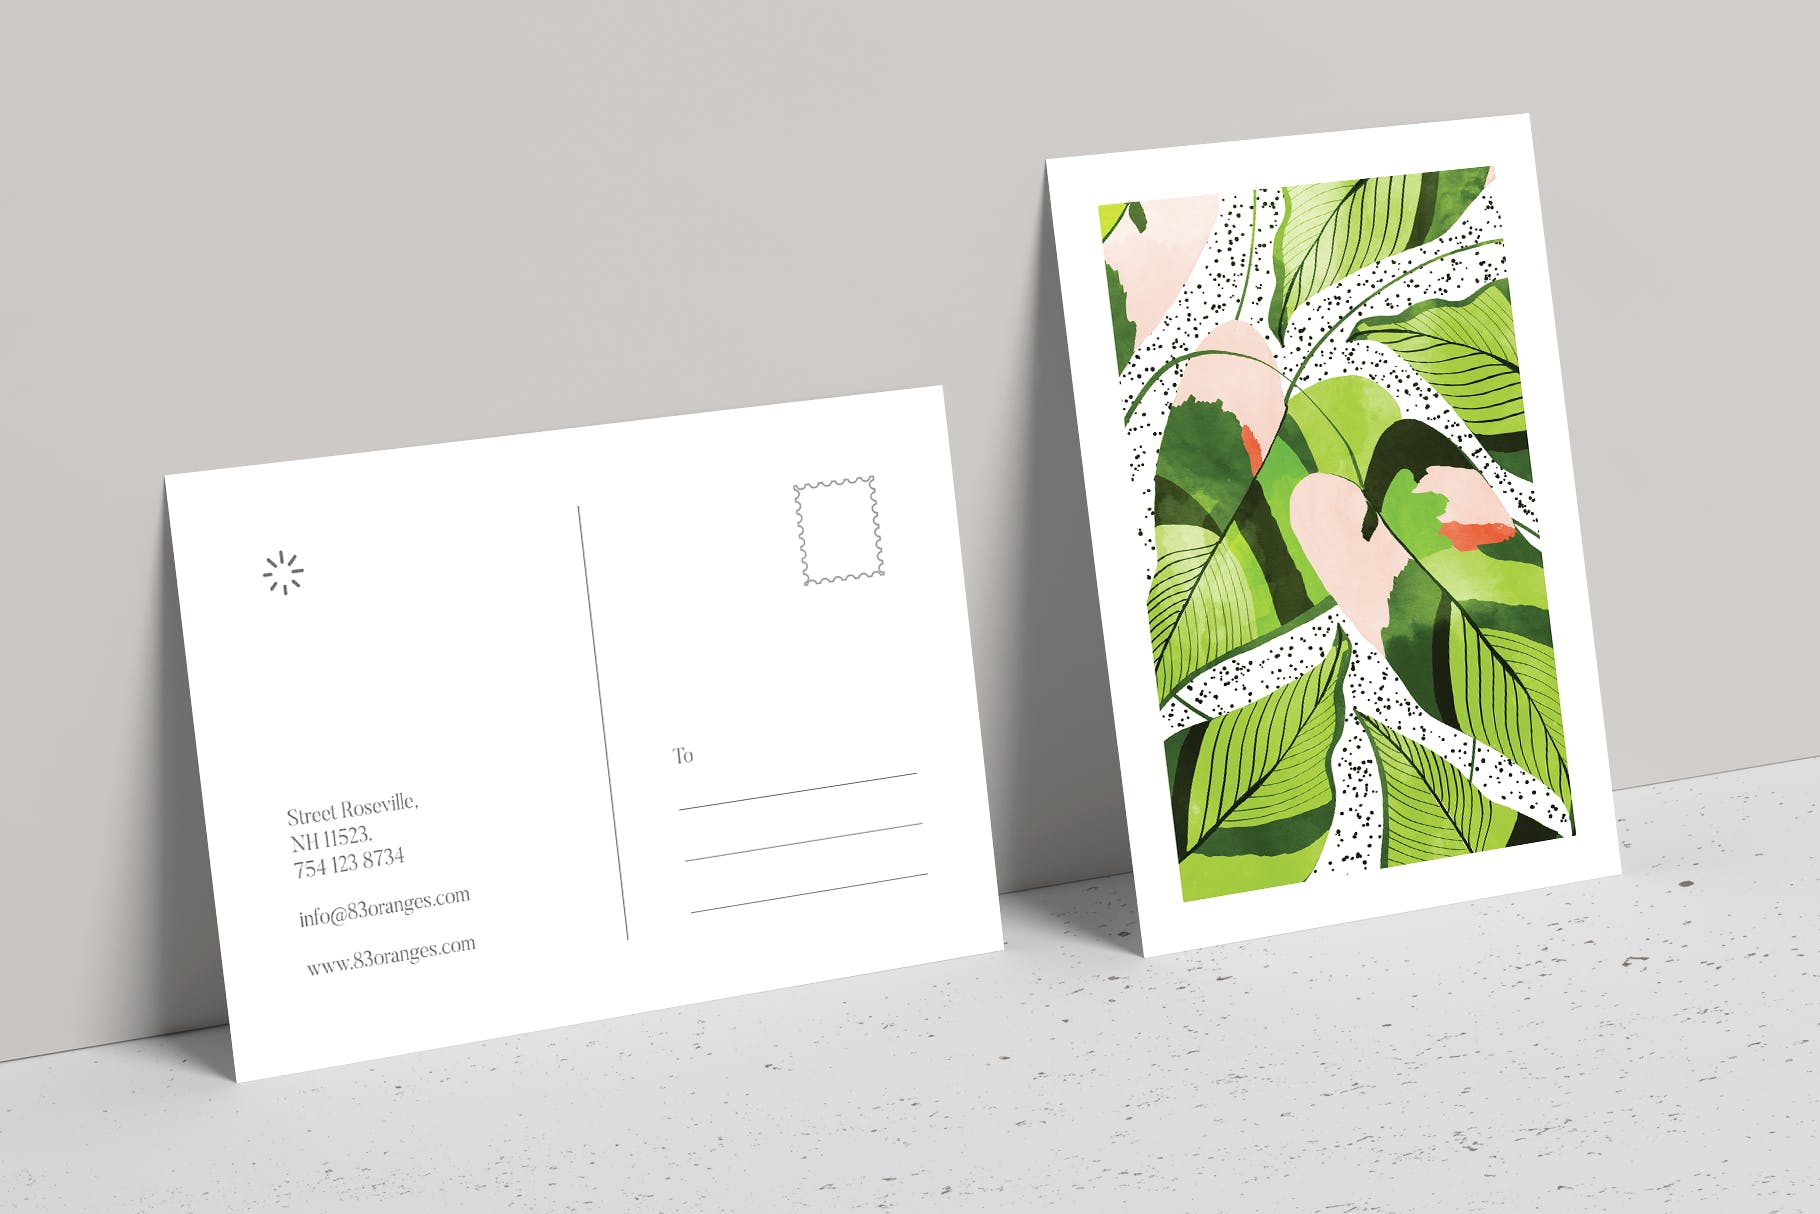 香蕉叶手绘艺术明信片&企业名片设计模板 Blushing Leaves Art & Stationary Kit插图1